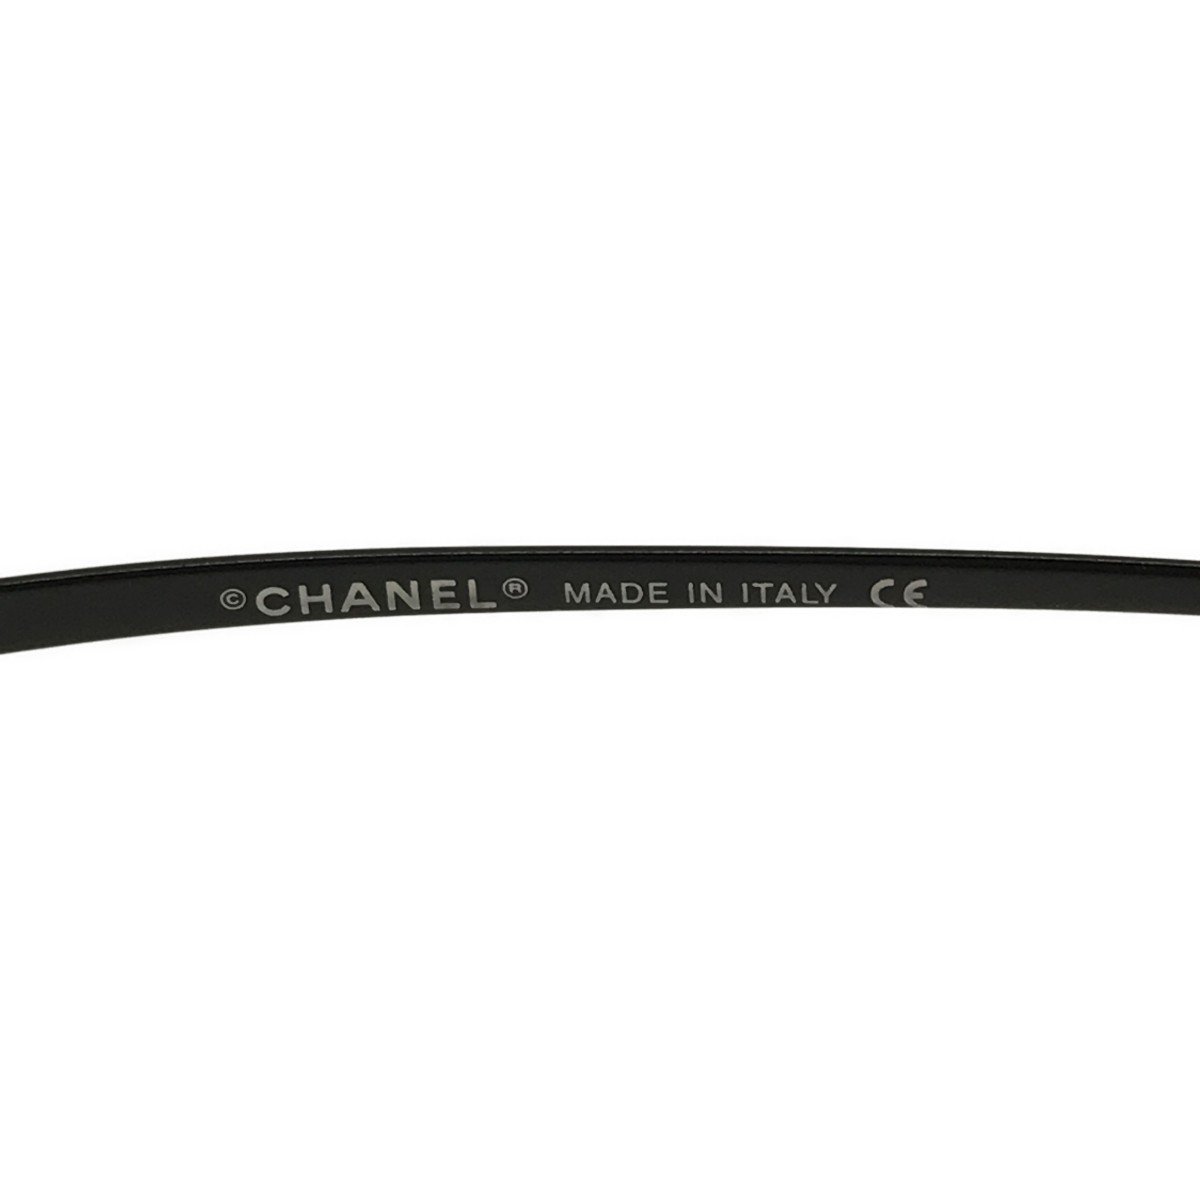 CHANEL Chanel [lay2722M] sunglasses 4017-D 62*17 here Mark rhinestone silver clear gray gradation 